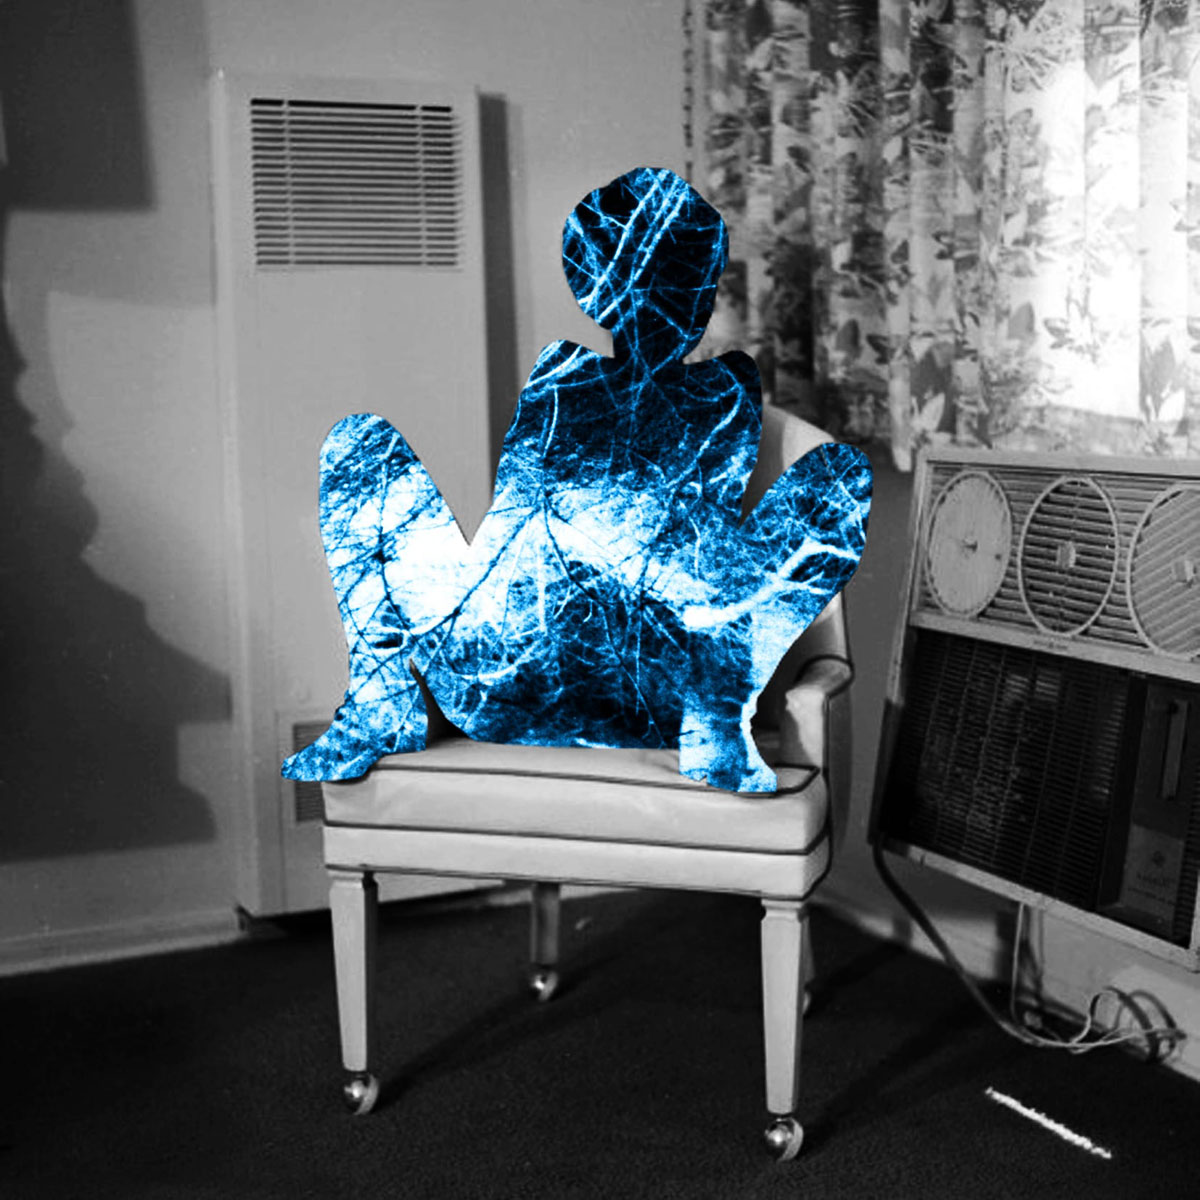 Original digital collage, dayglow blue figure in chair